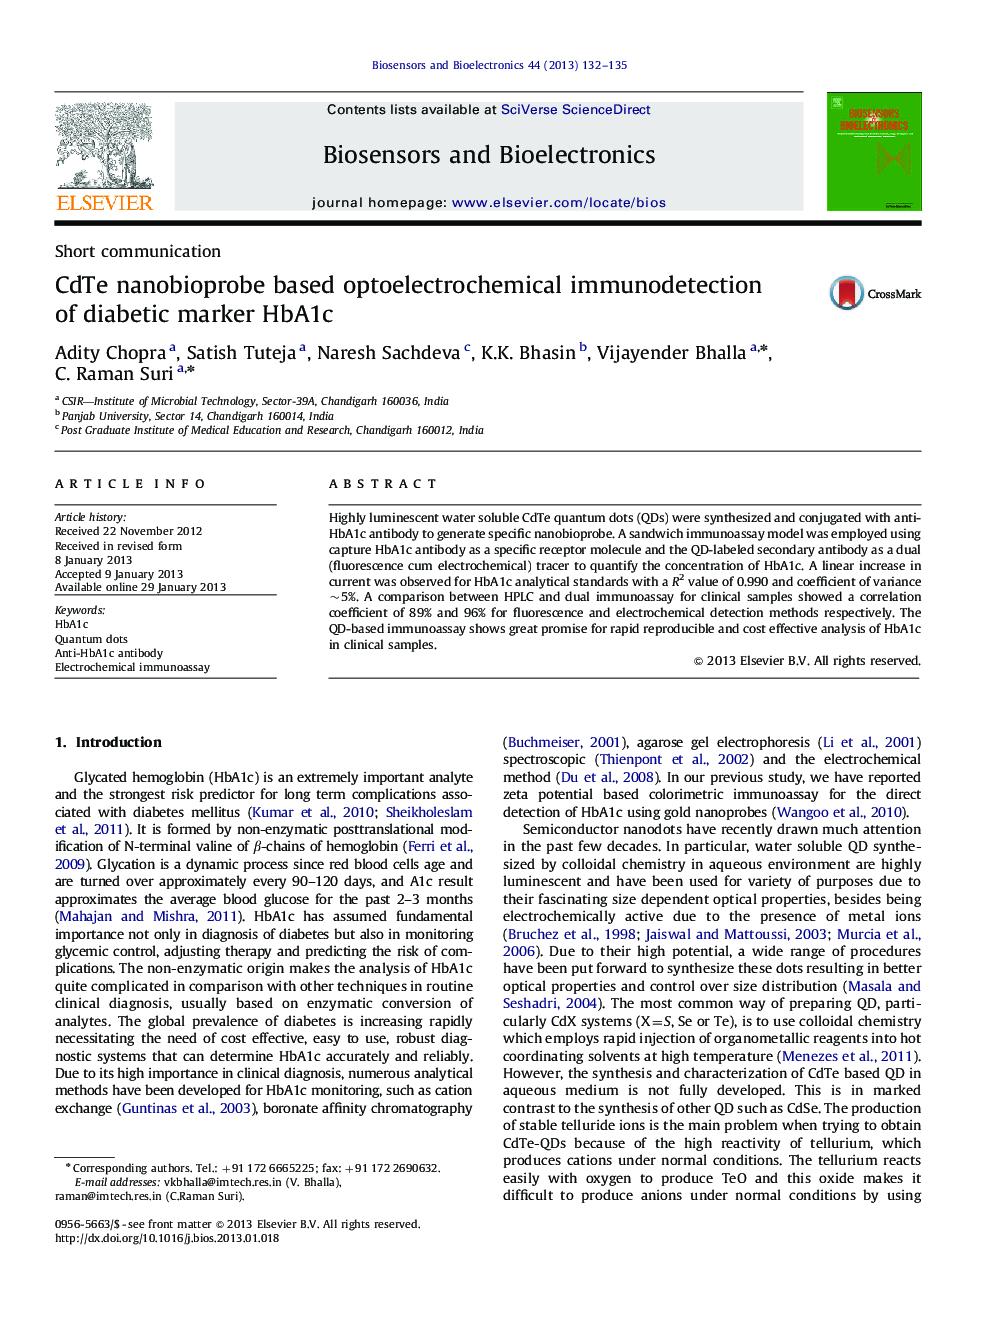 CdTe nanobioprobe based optoelectrochemical immunodetection of diabetic marker HbA1c